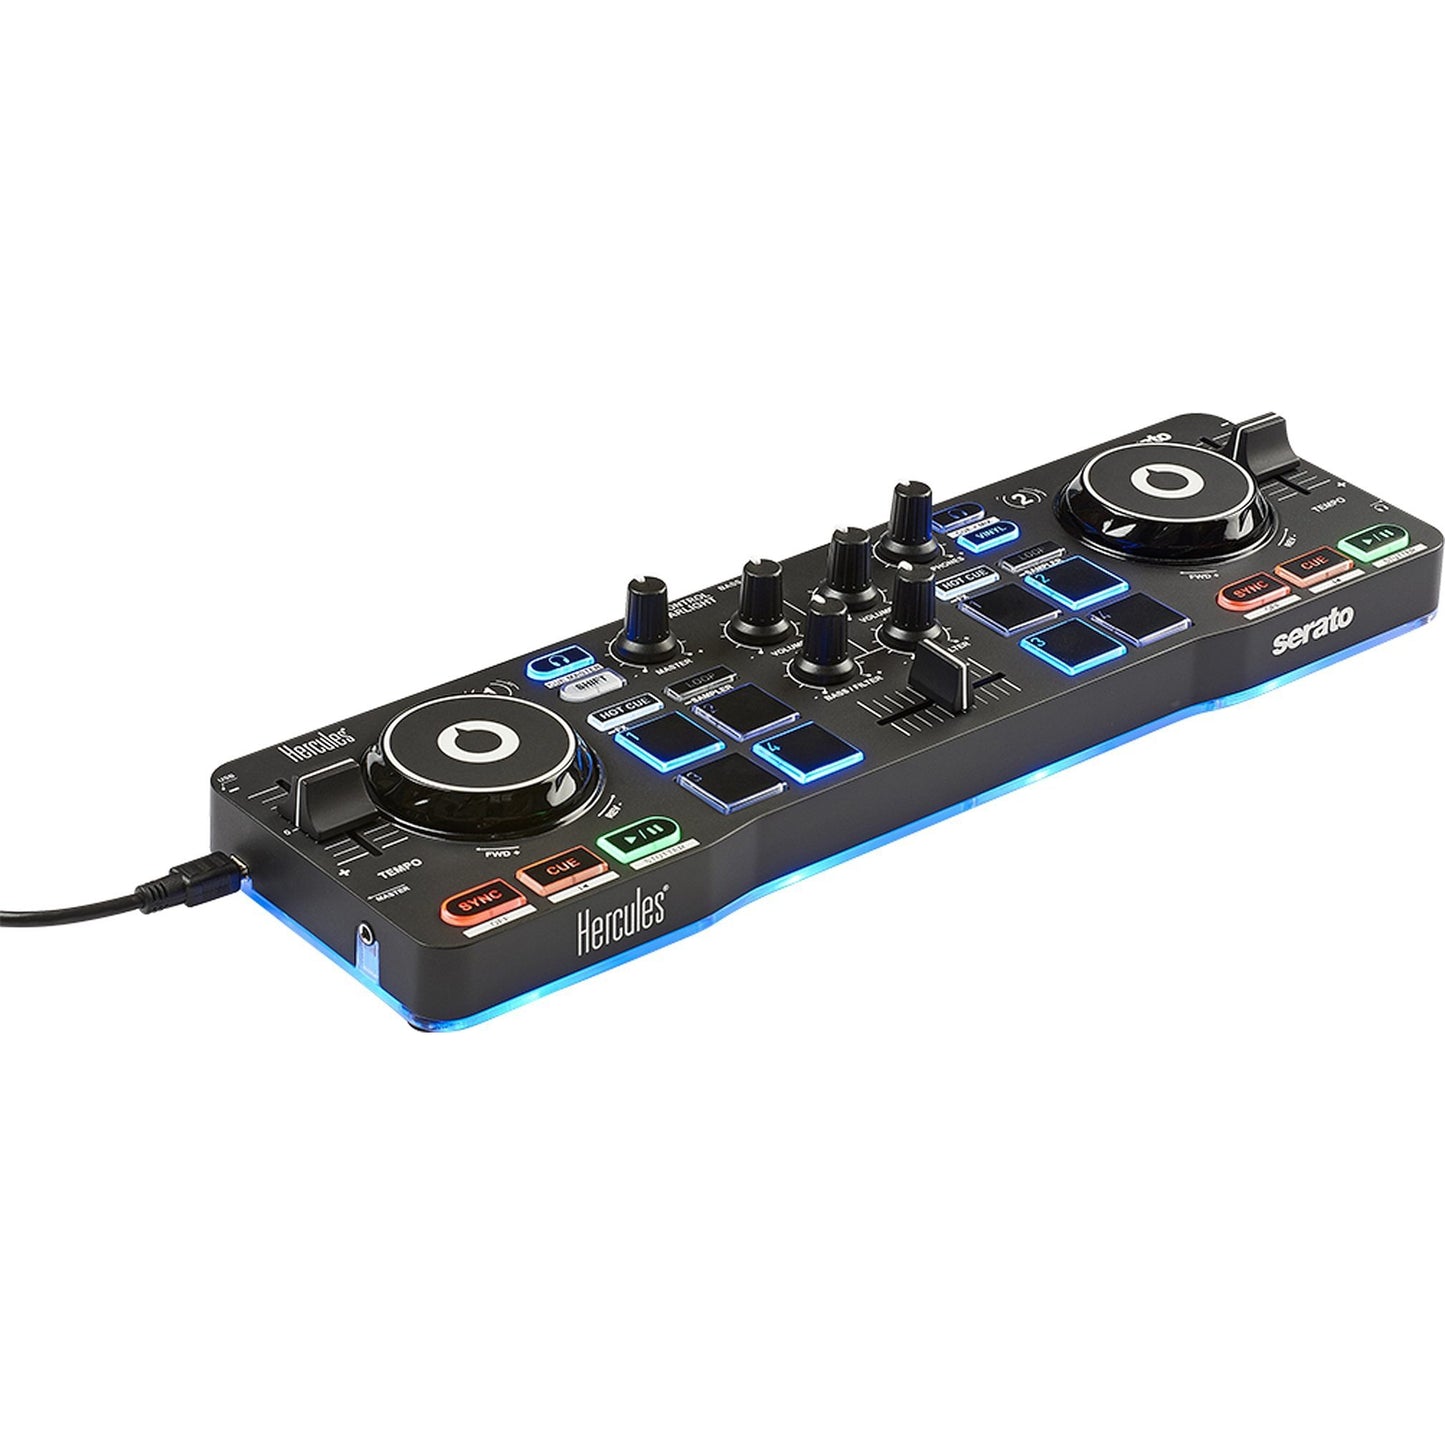 Hercules DJStarter Kit DJ Controller Bundle